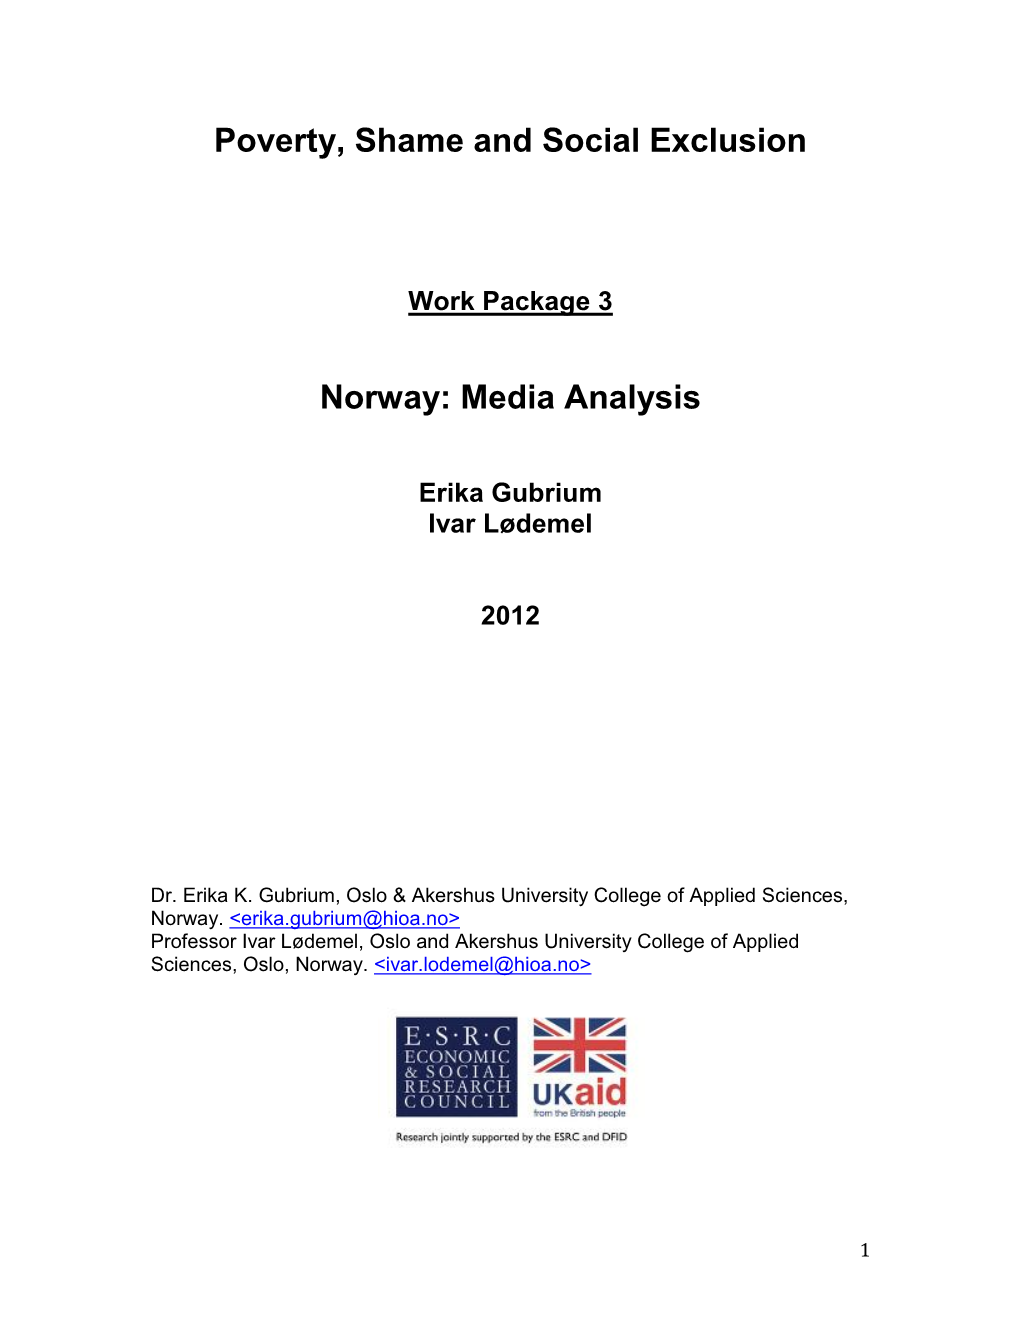 WP3 Media Analysis Norway